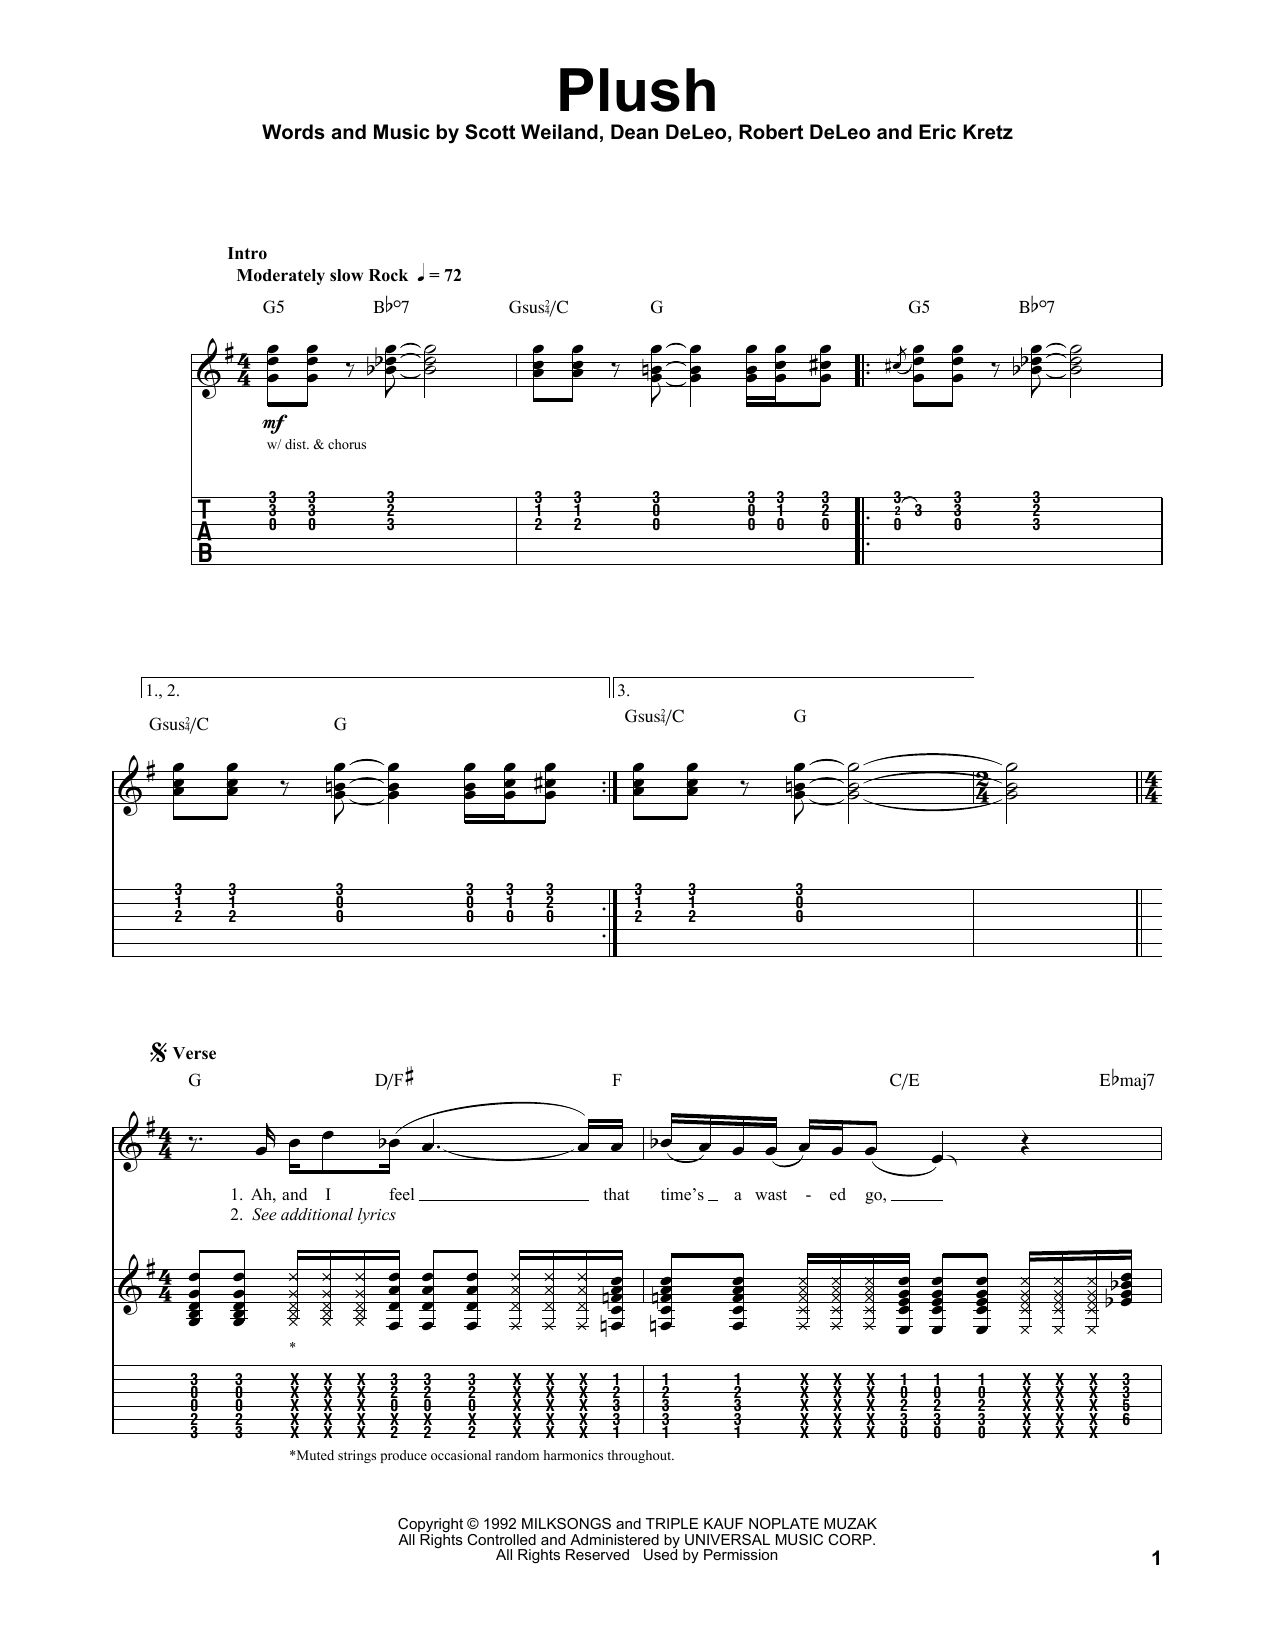 Stone Temple Pilots Plush Sheet Music Notes & Chords for Guitar Ensemble - Download or Print PDF